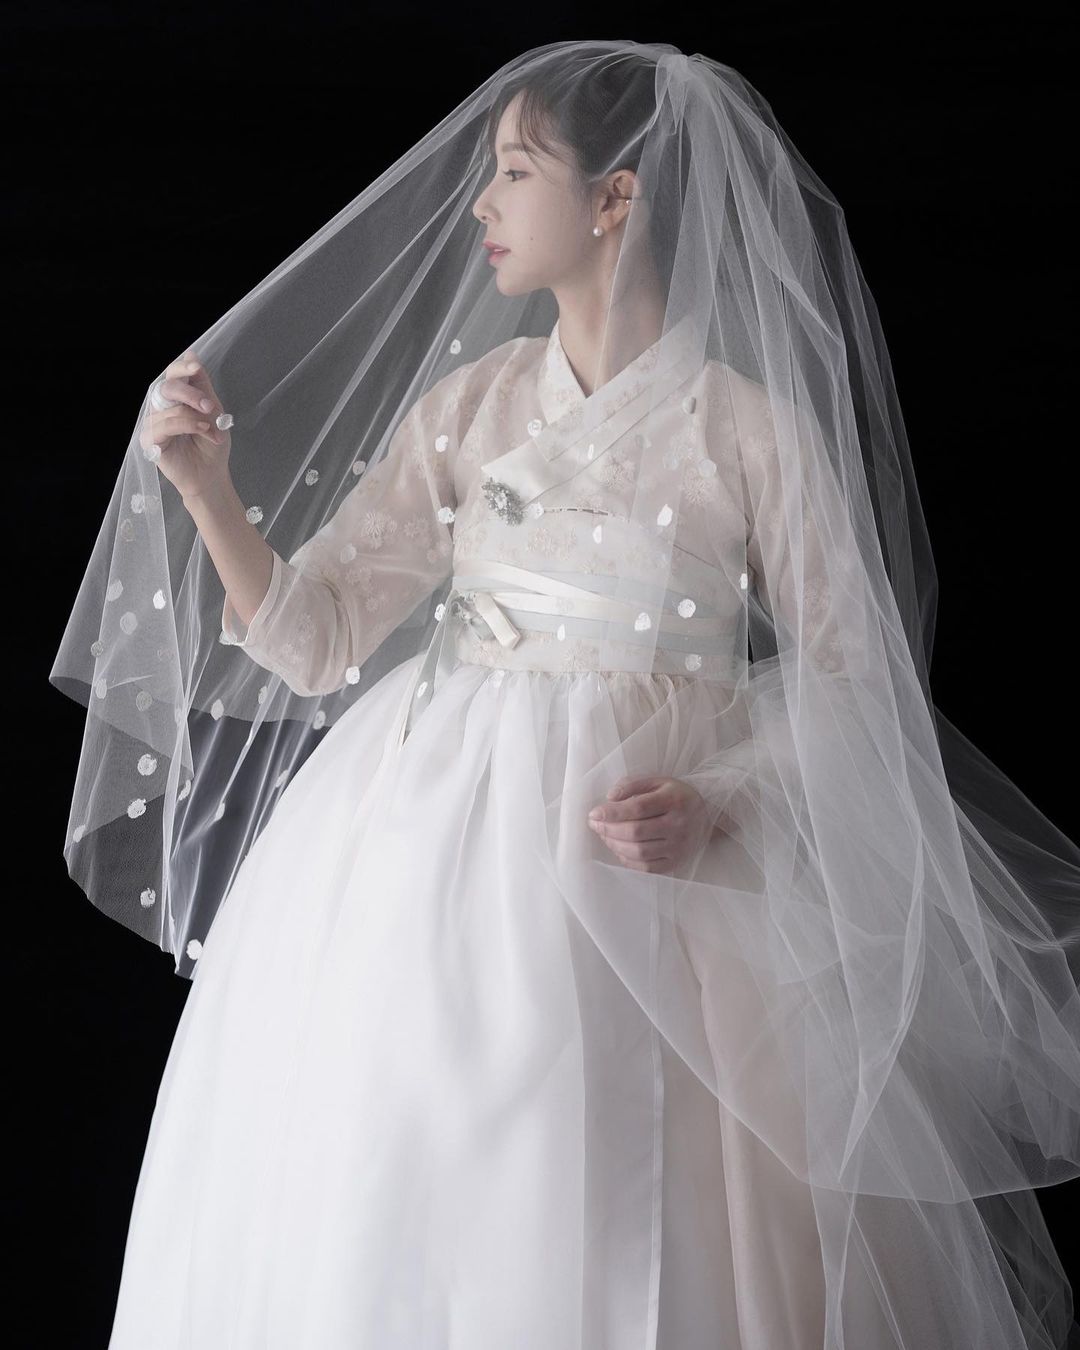 Yaongyi вышла замуж